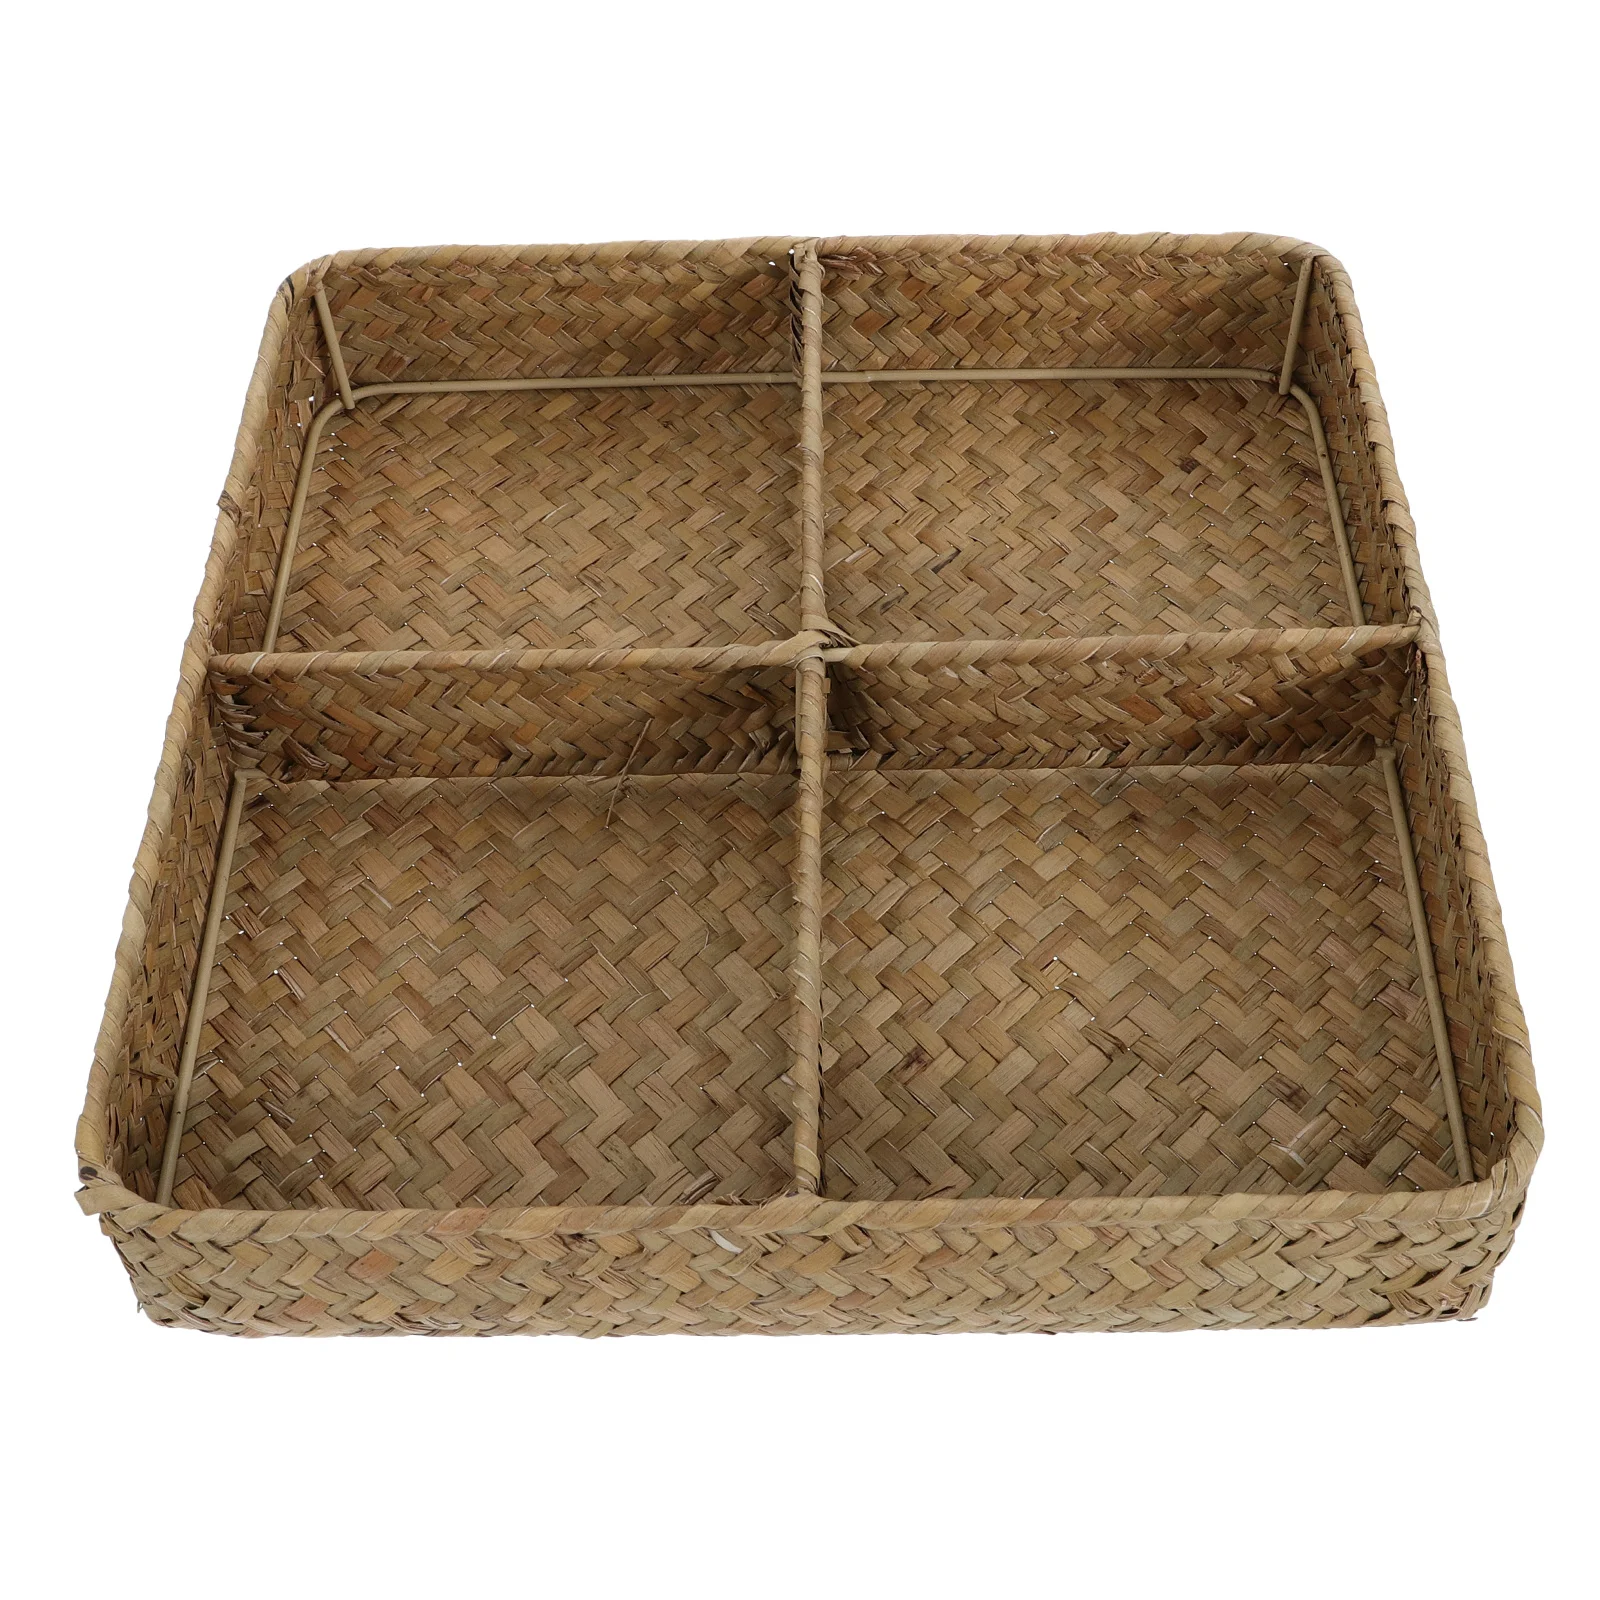 

Storage Basket Tray Hyacinth Wicker Woven Serving Baskets Rattan Fruit Seagrass Water Divided Bin Makeup Organizer Bread Box